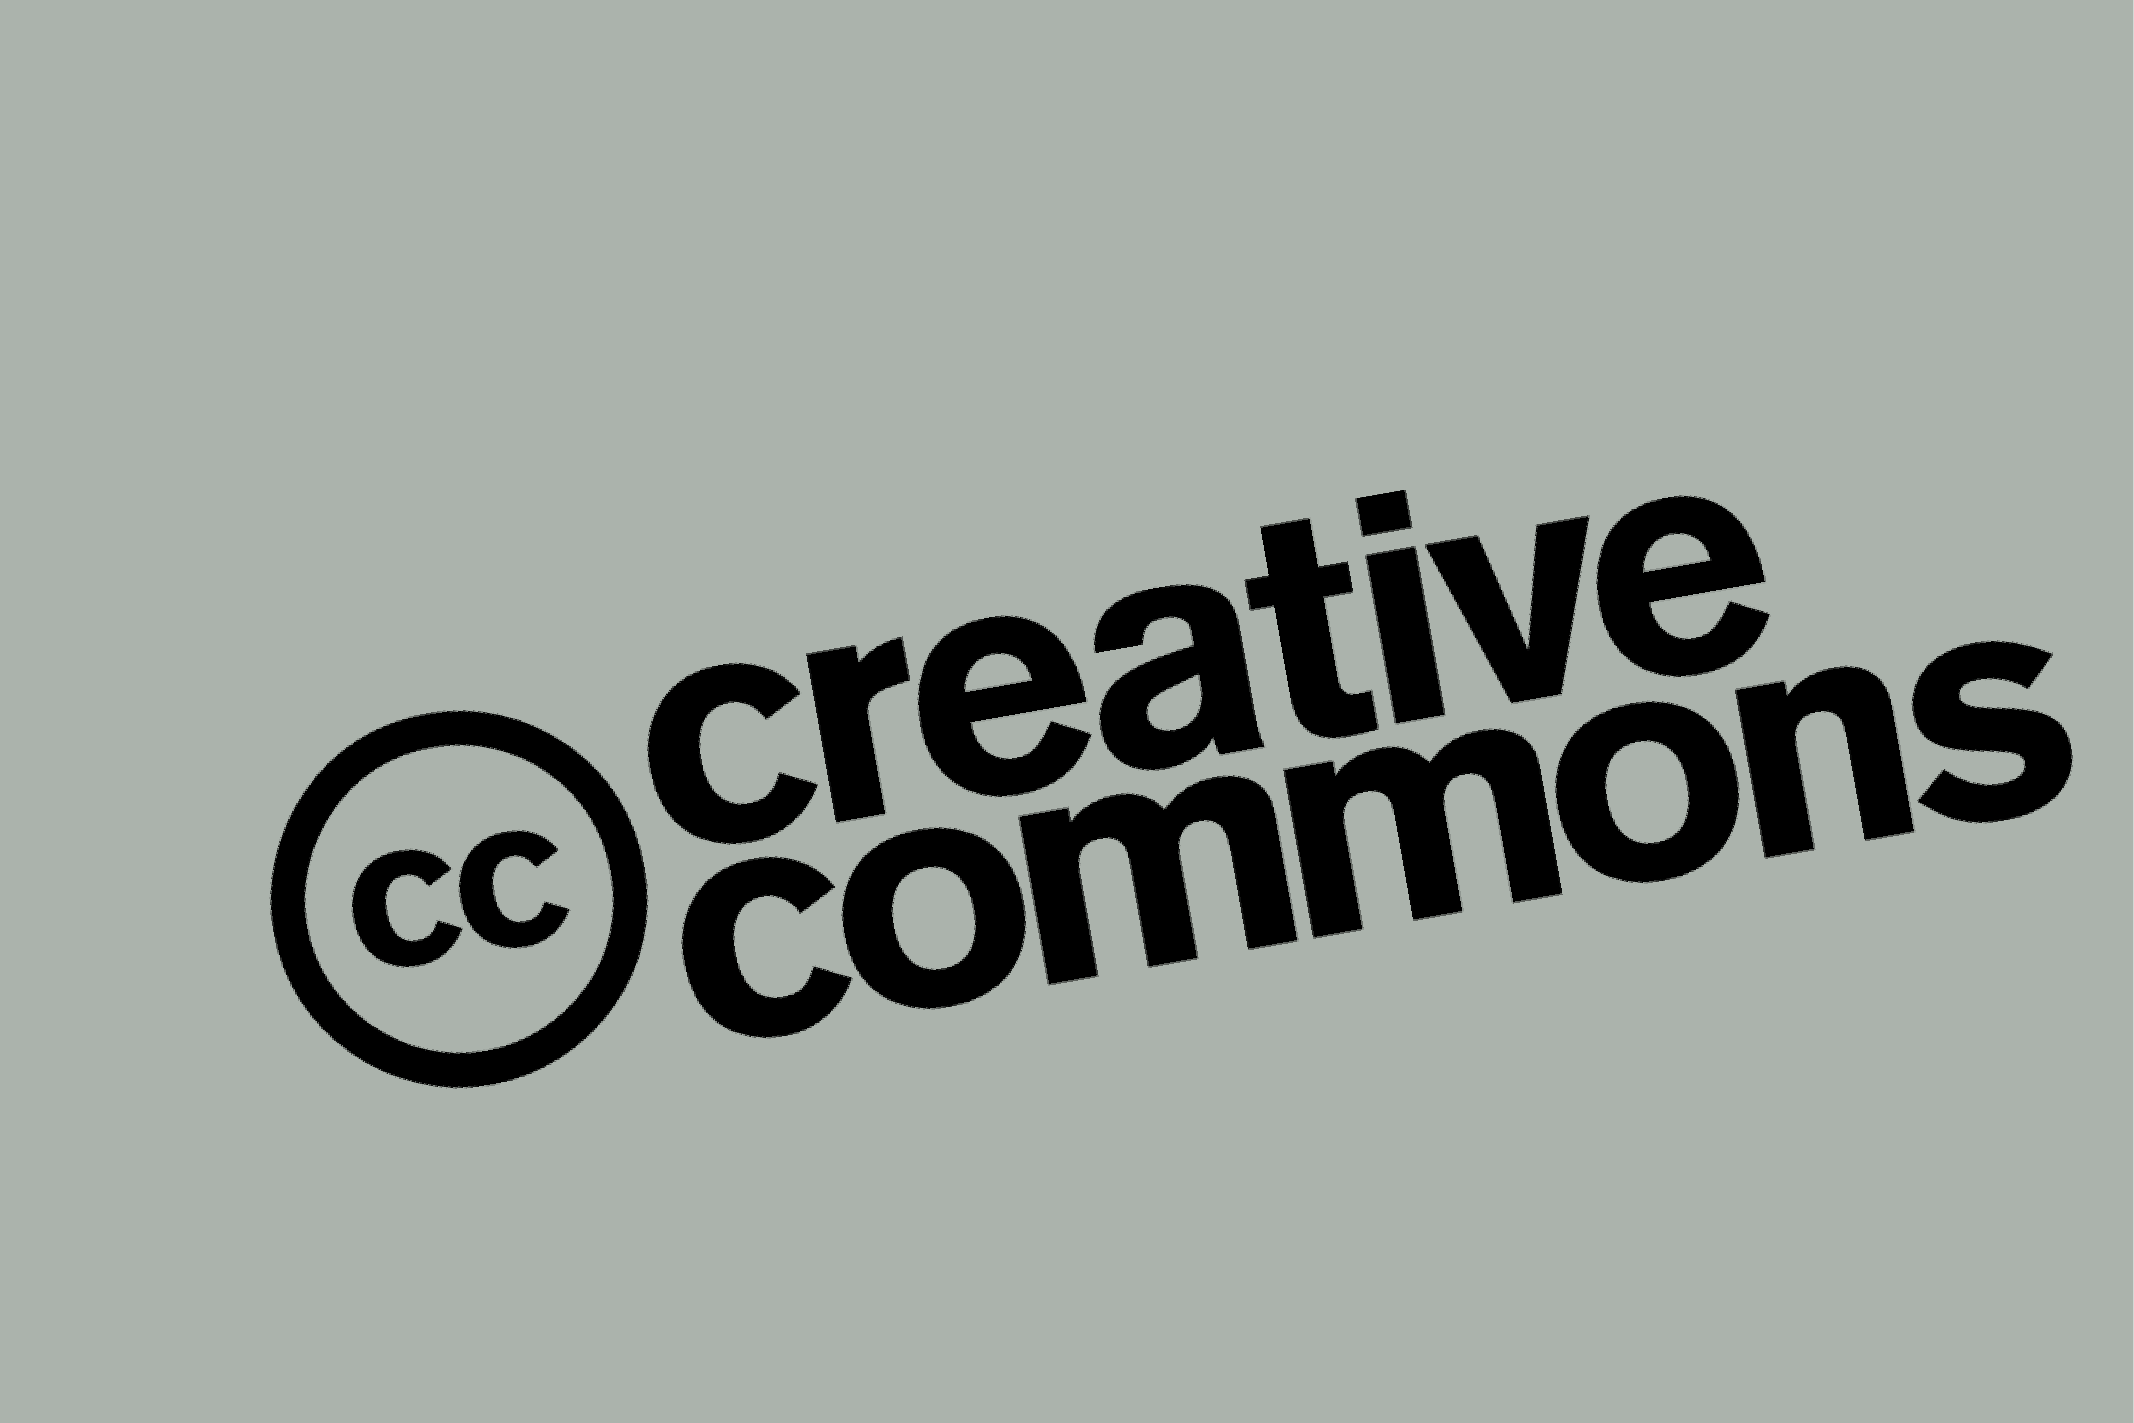 Creative commons license. Creative Commons знак. Creative Commons картинки. Лицензии Creative Commons. Картинка cc Creative Commons.